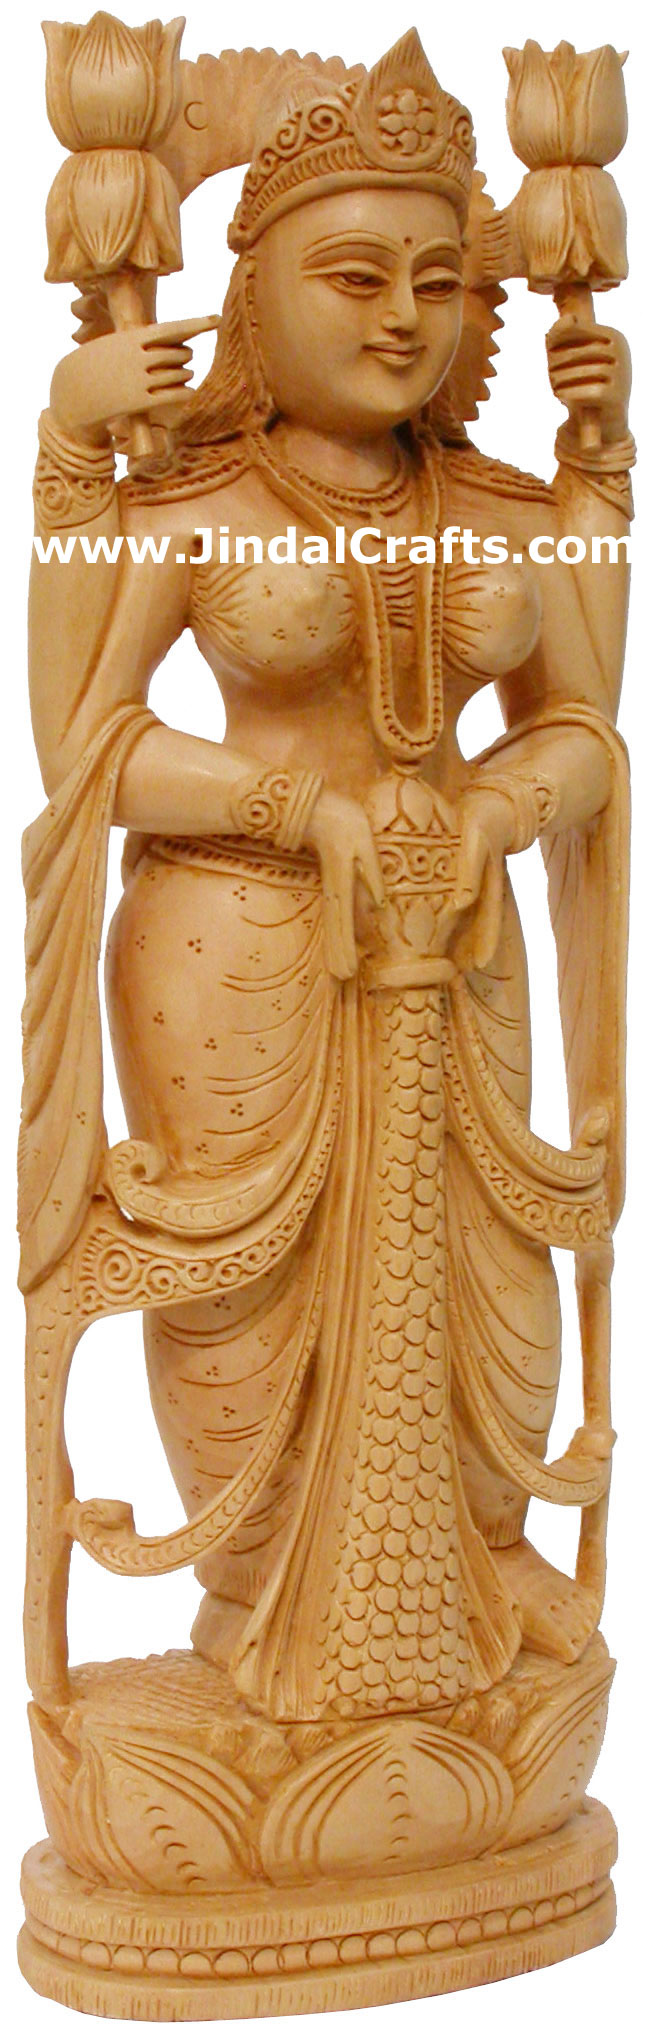 Hindu Deities Goddess Lakshmi India Wood Carving Arts